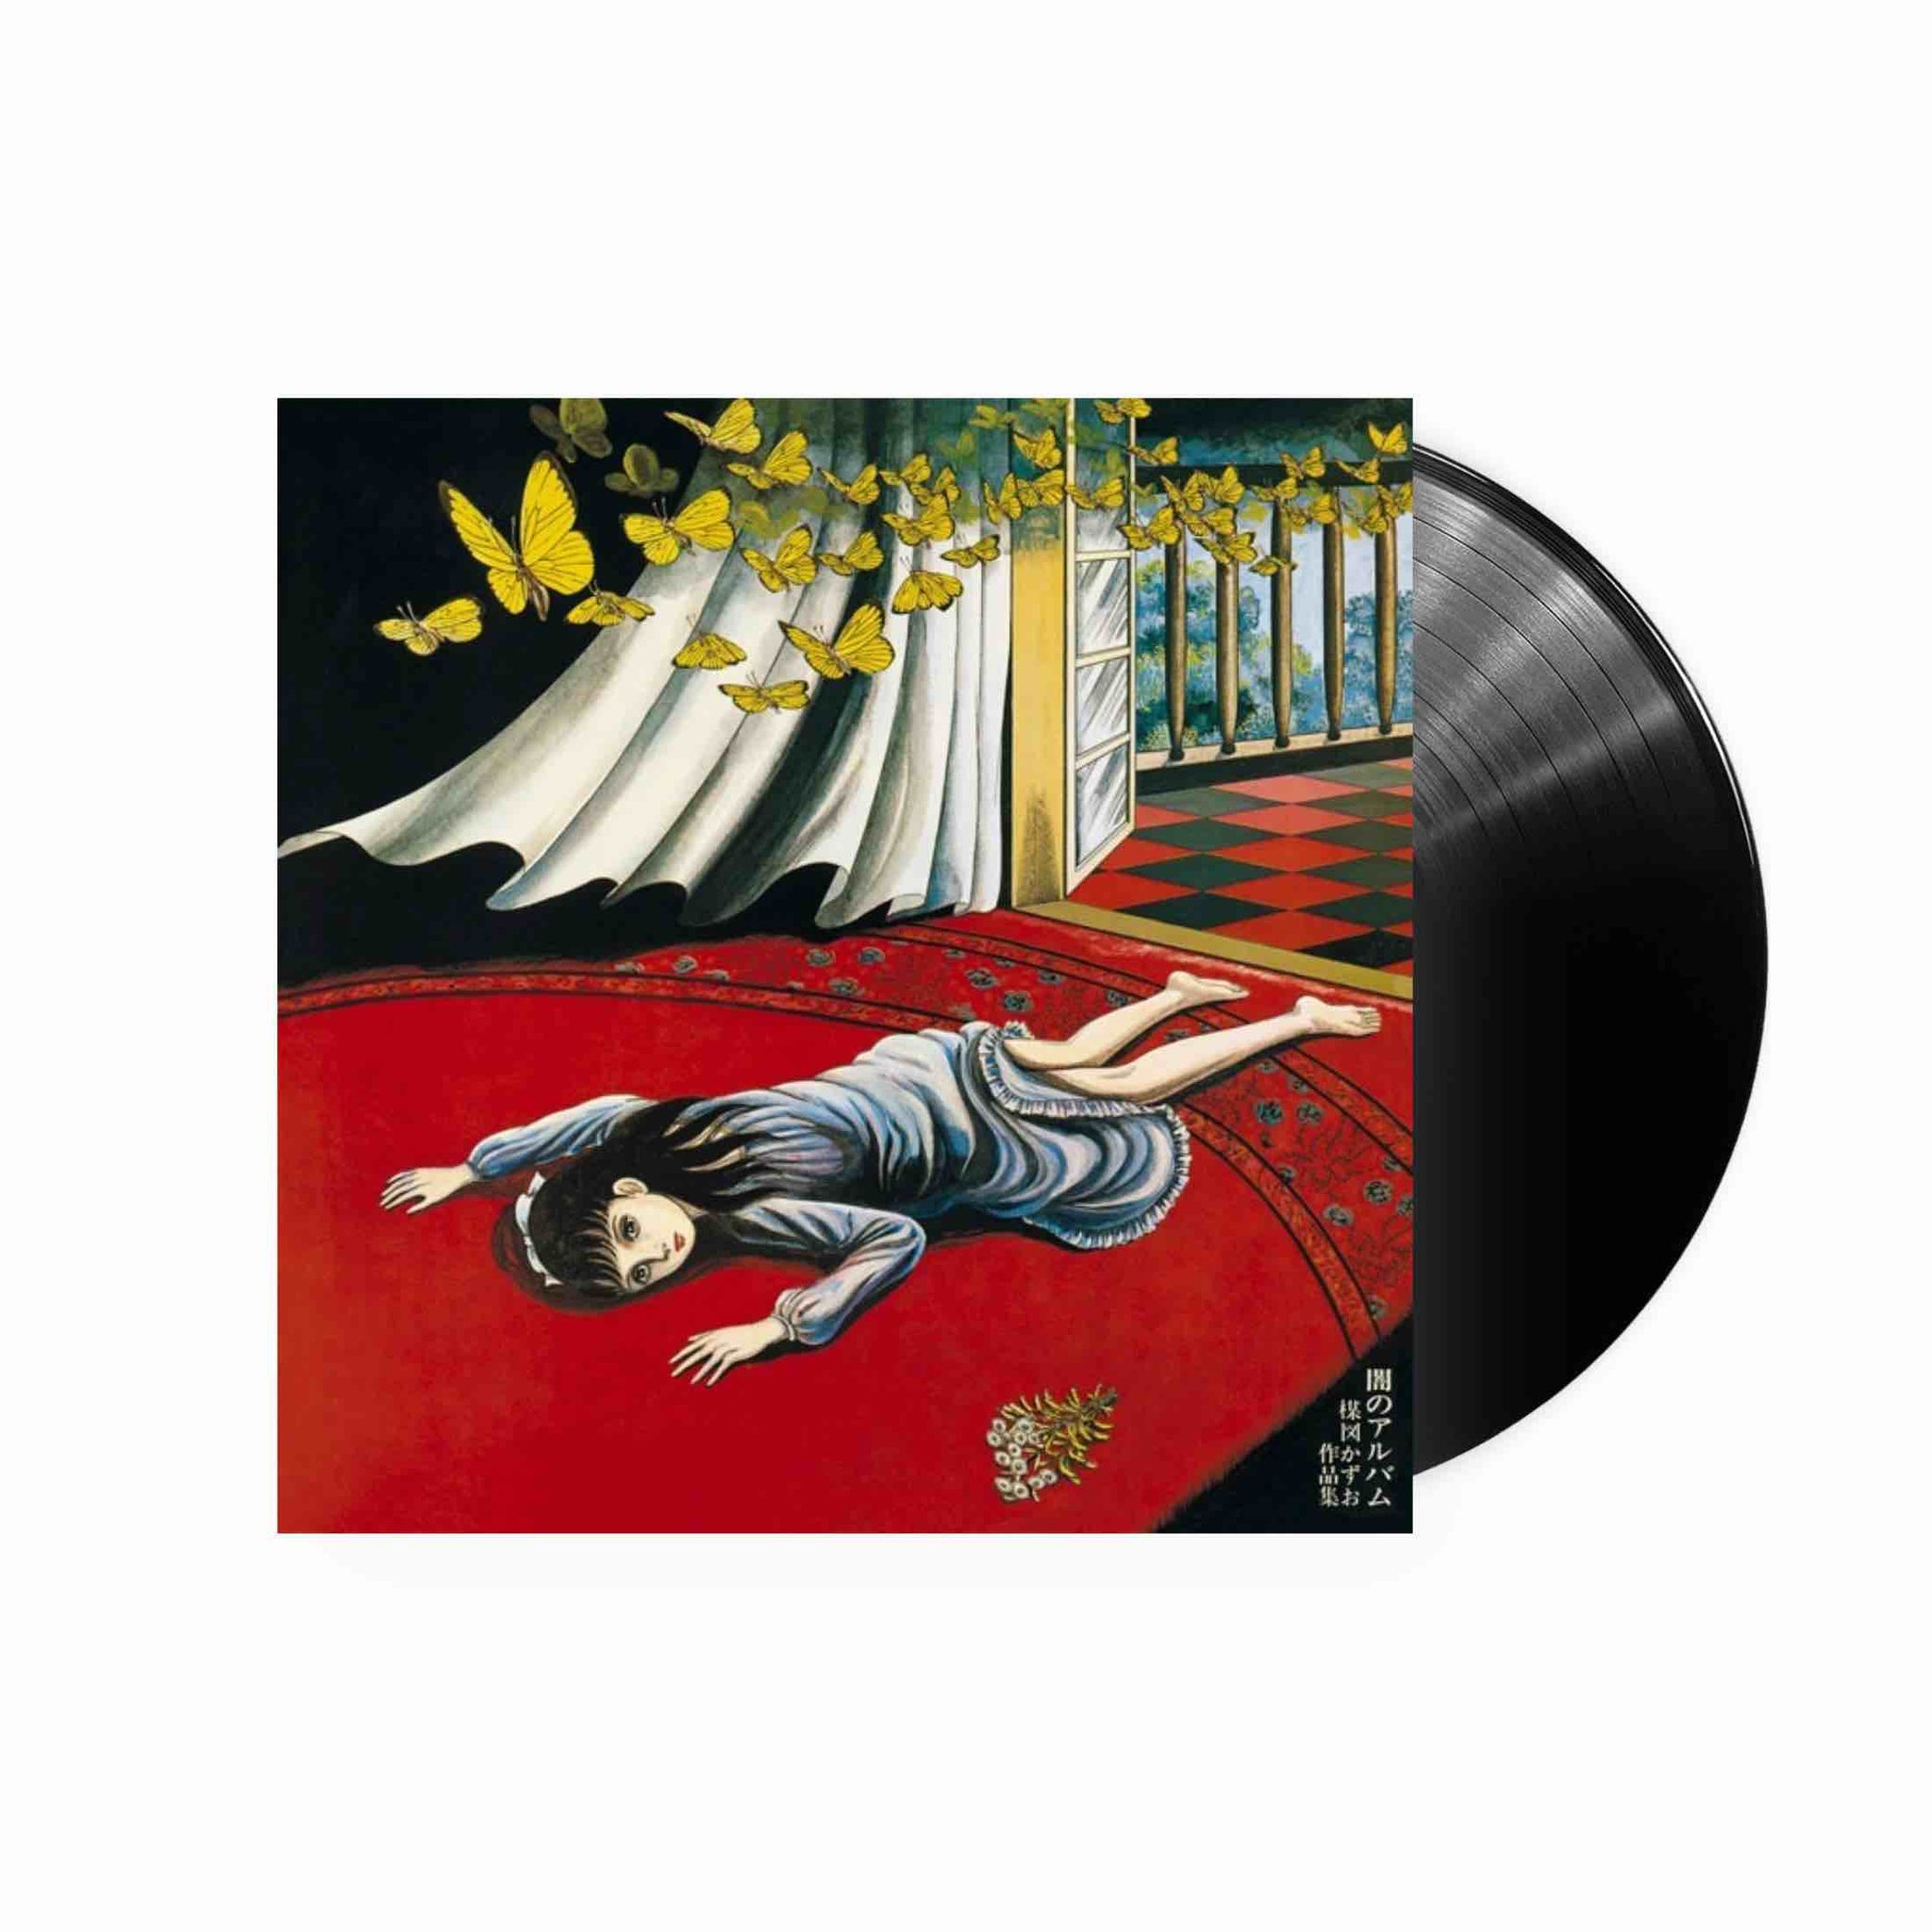 Elfen Lied Original Soundtrack LP (Clear Vinyl) – Plastic Stone Records